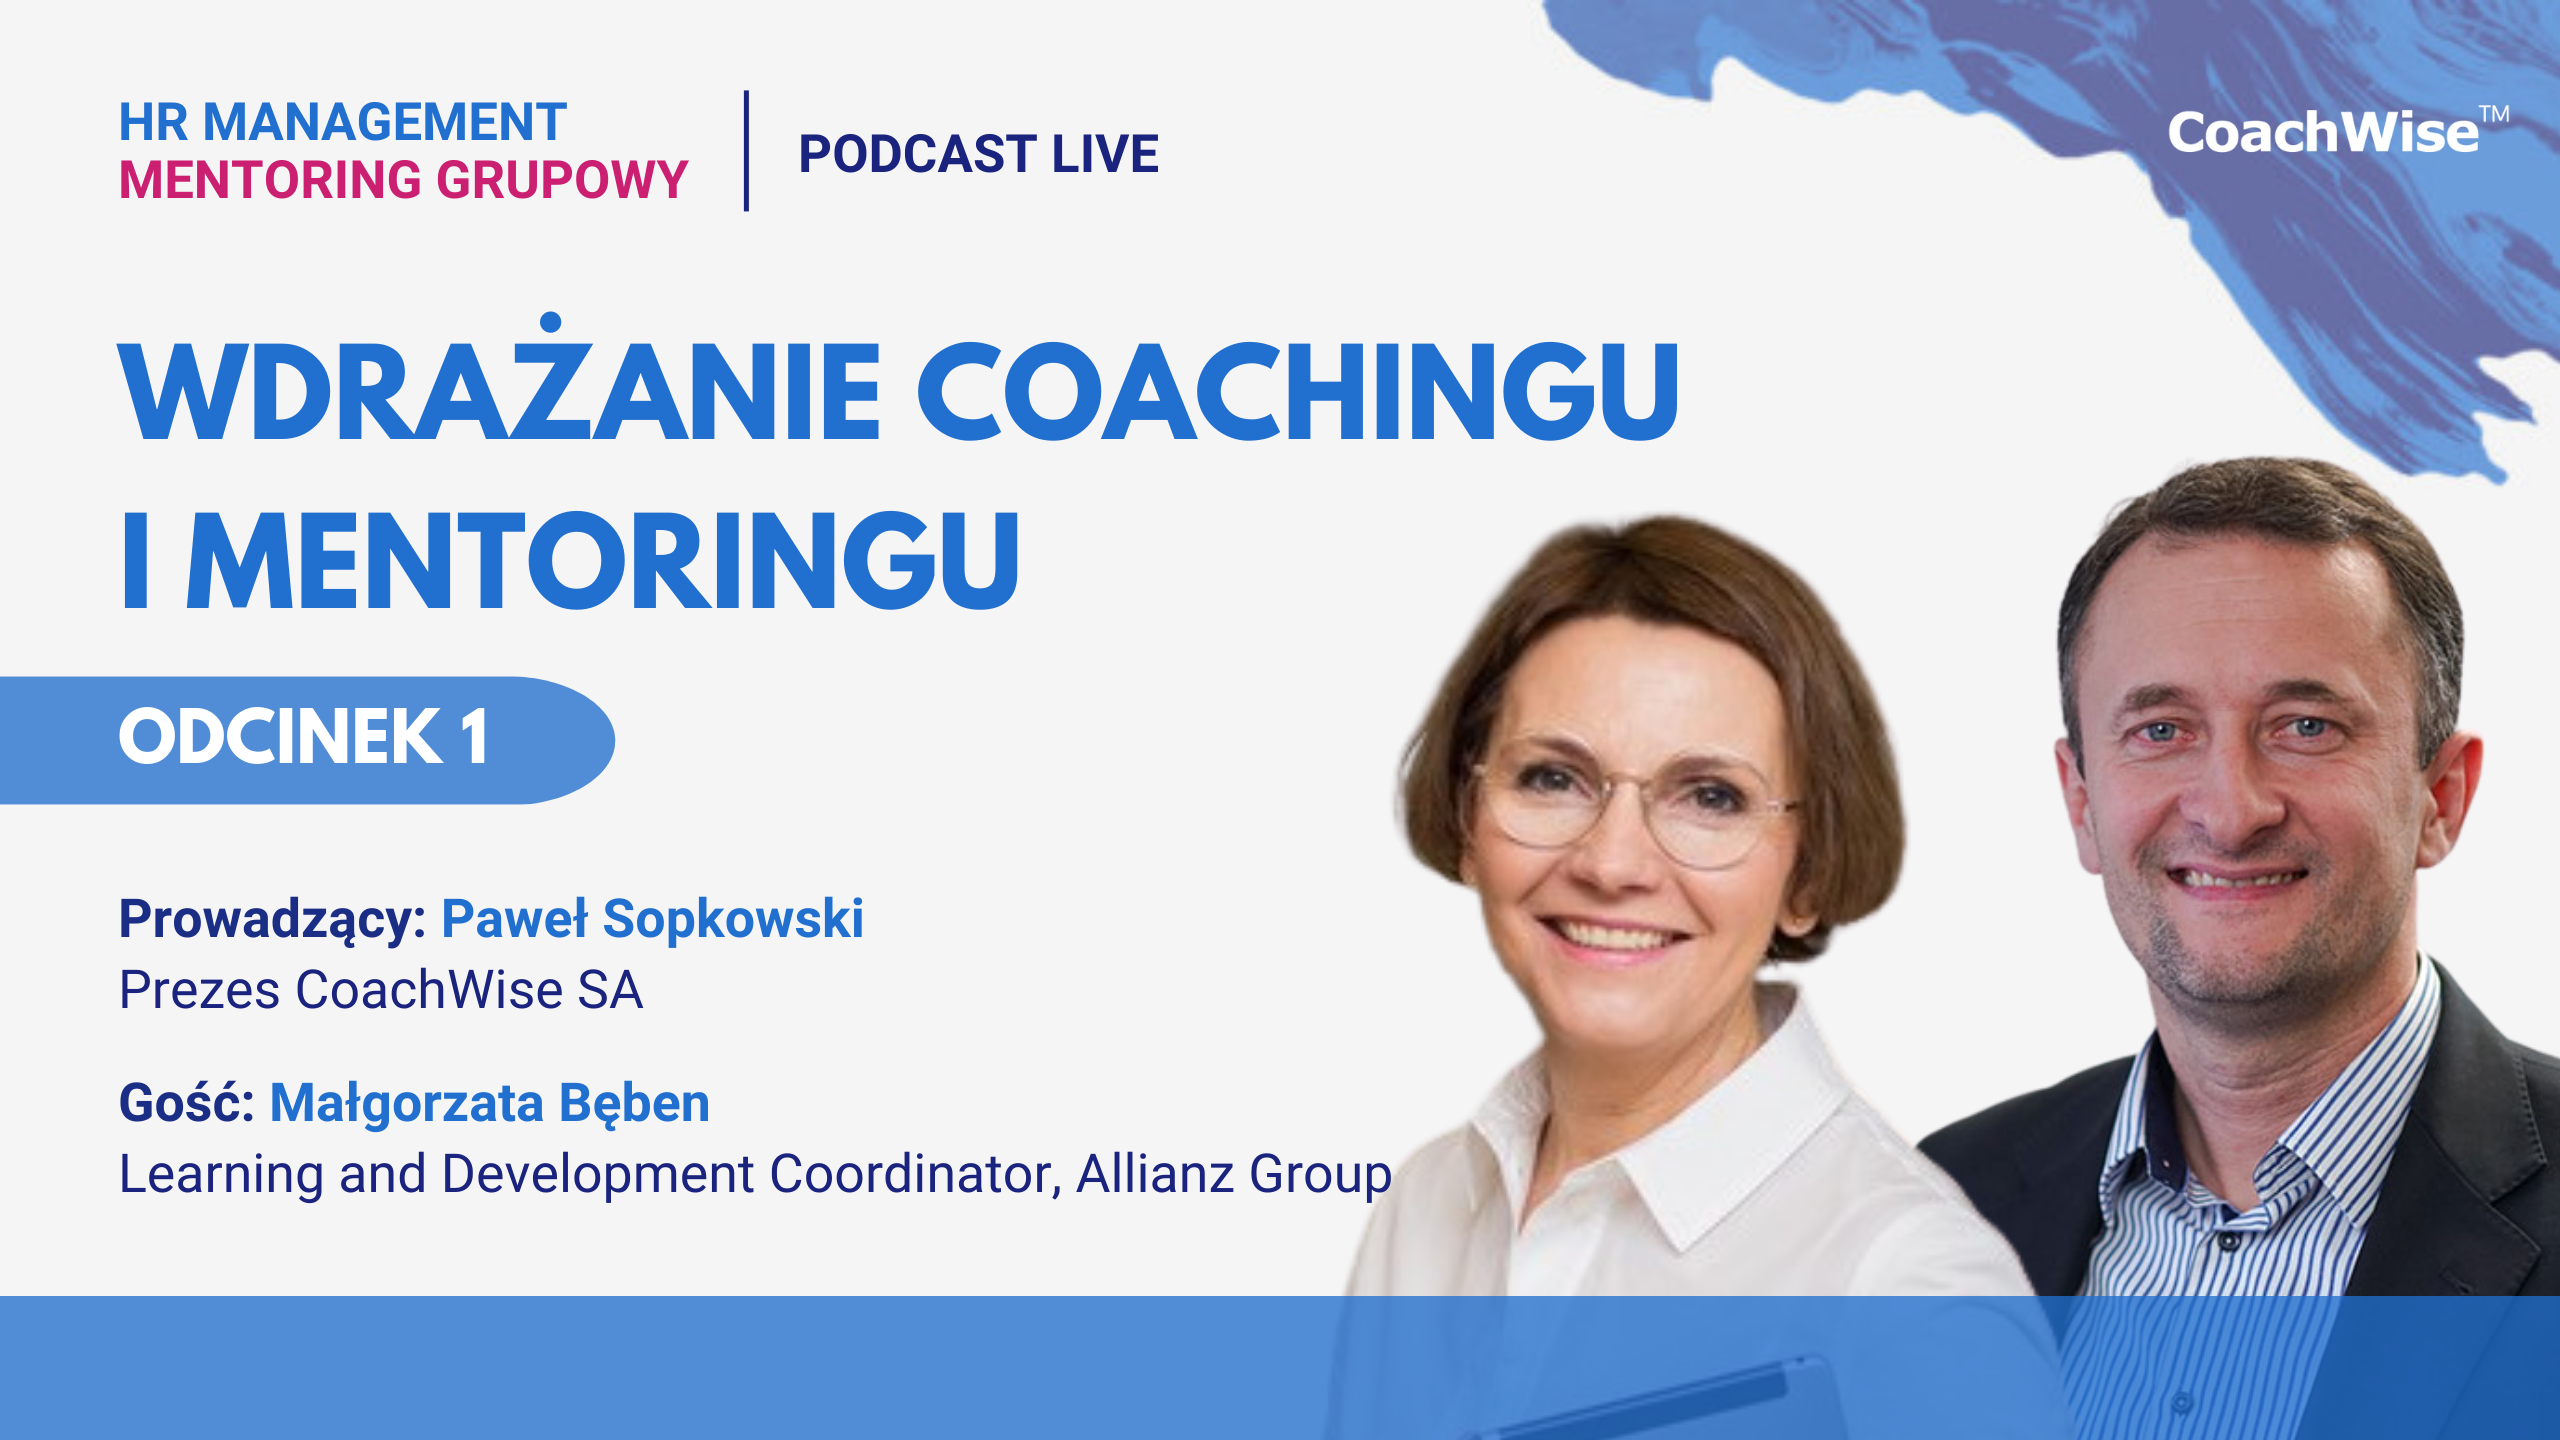 „Wdrażanie coachingu i mentoringu” Podcast Live odc. 1